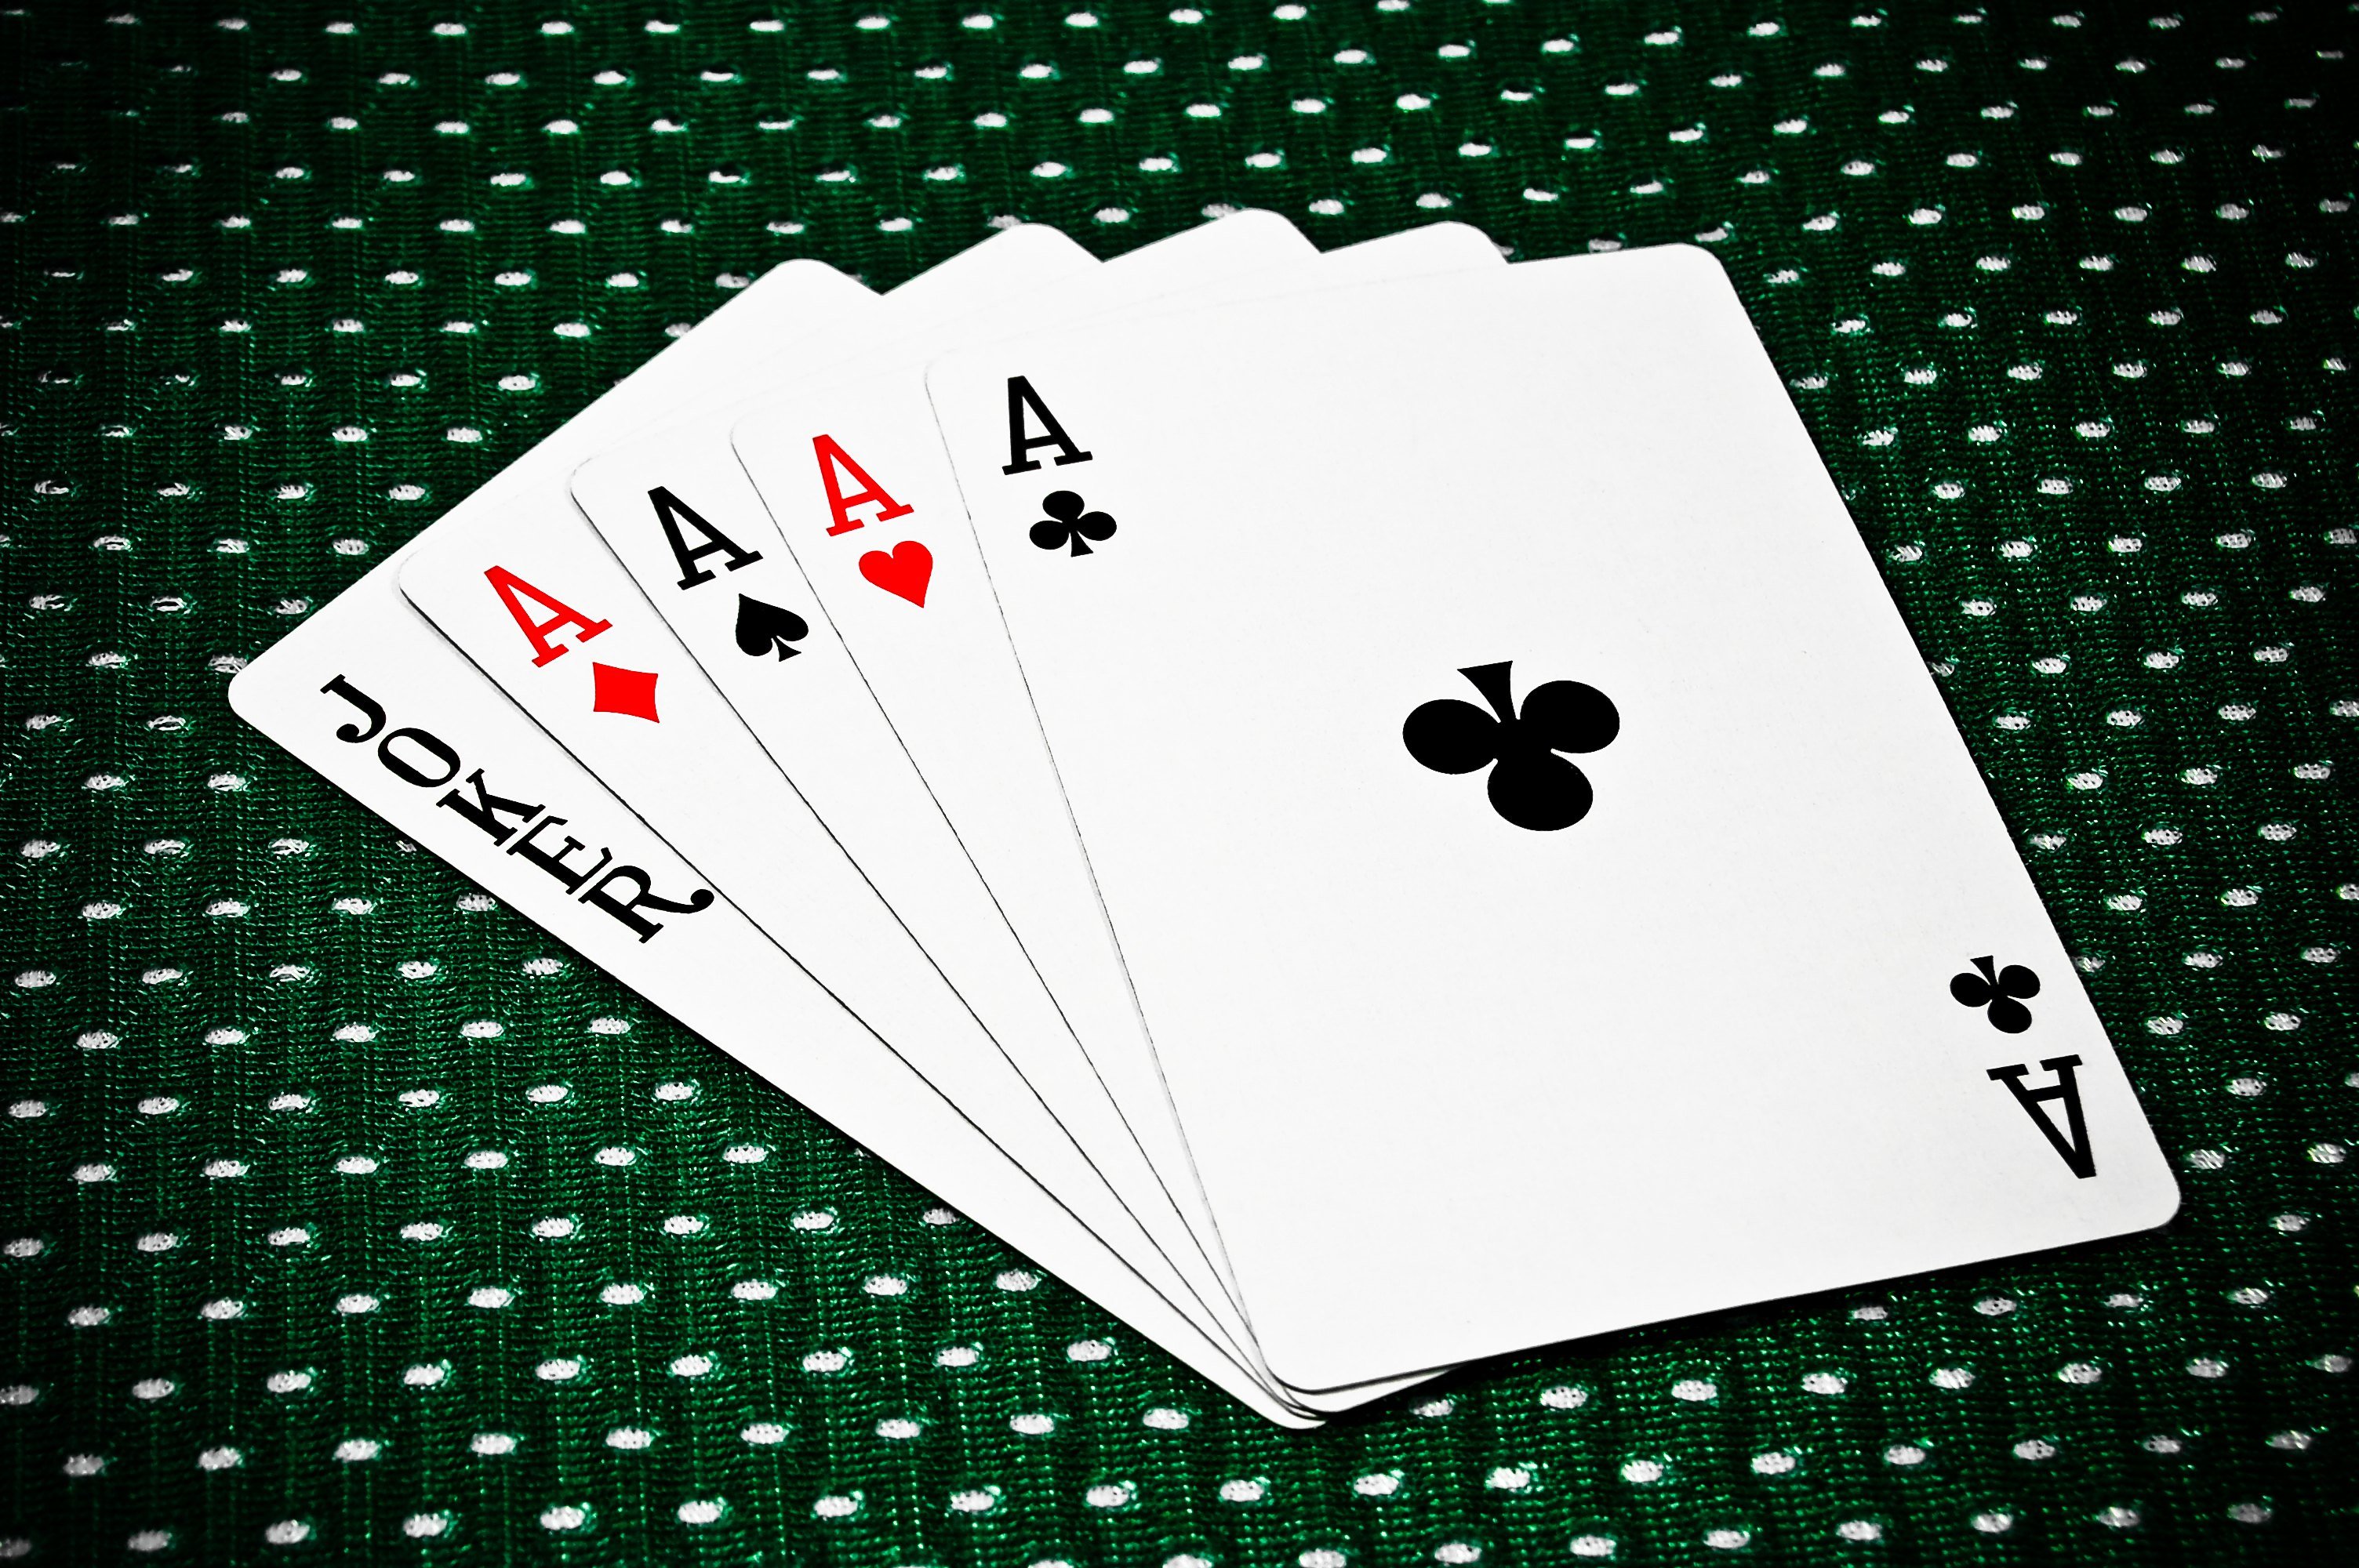 18 cards. Покер карты. 4 Туза и Джокер. Четыре туза и Джокер в покере. Игральные карты туз.